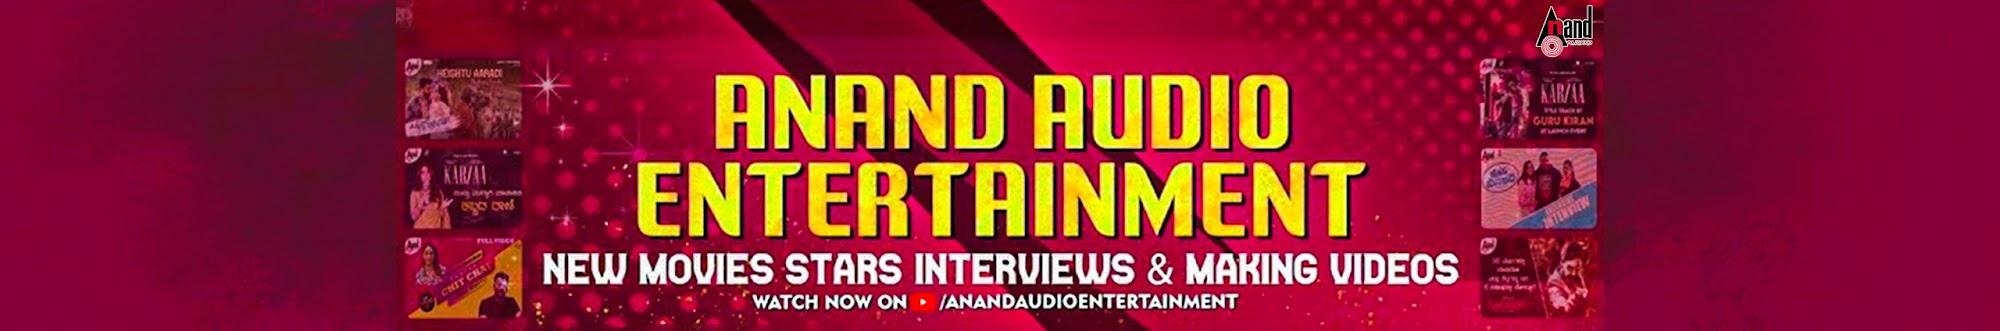 Anand Audio Entertainment